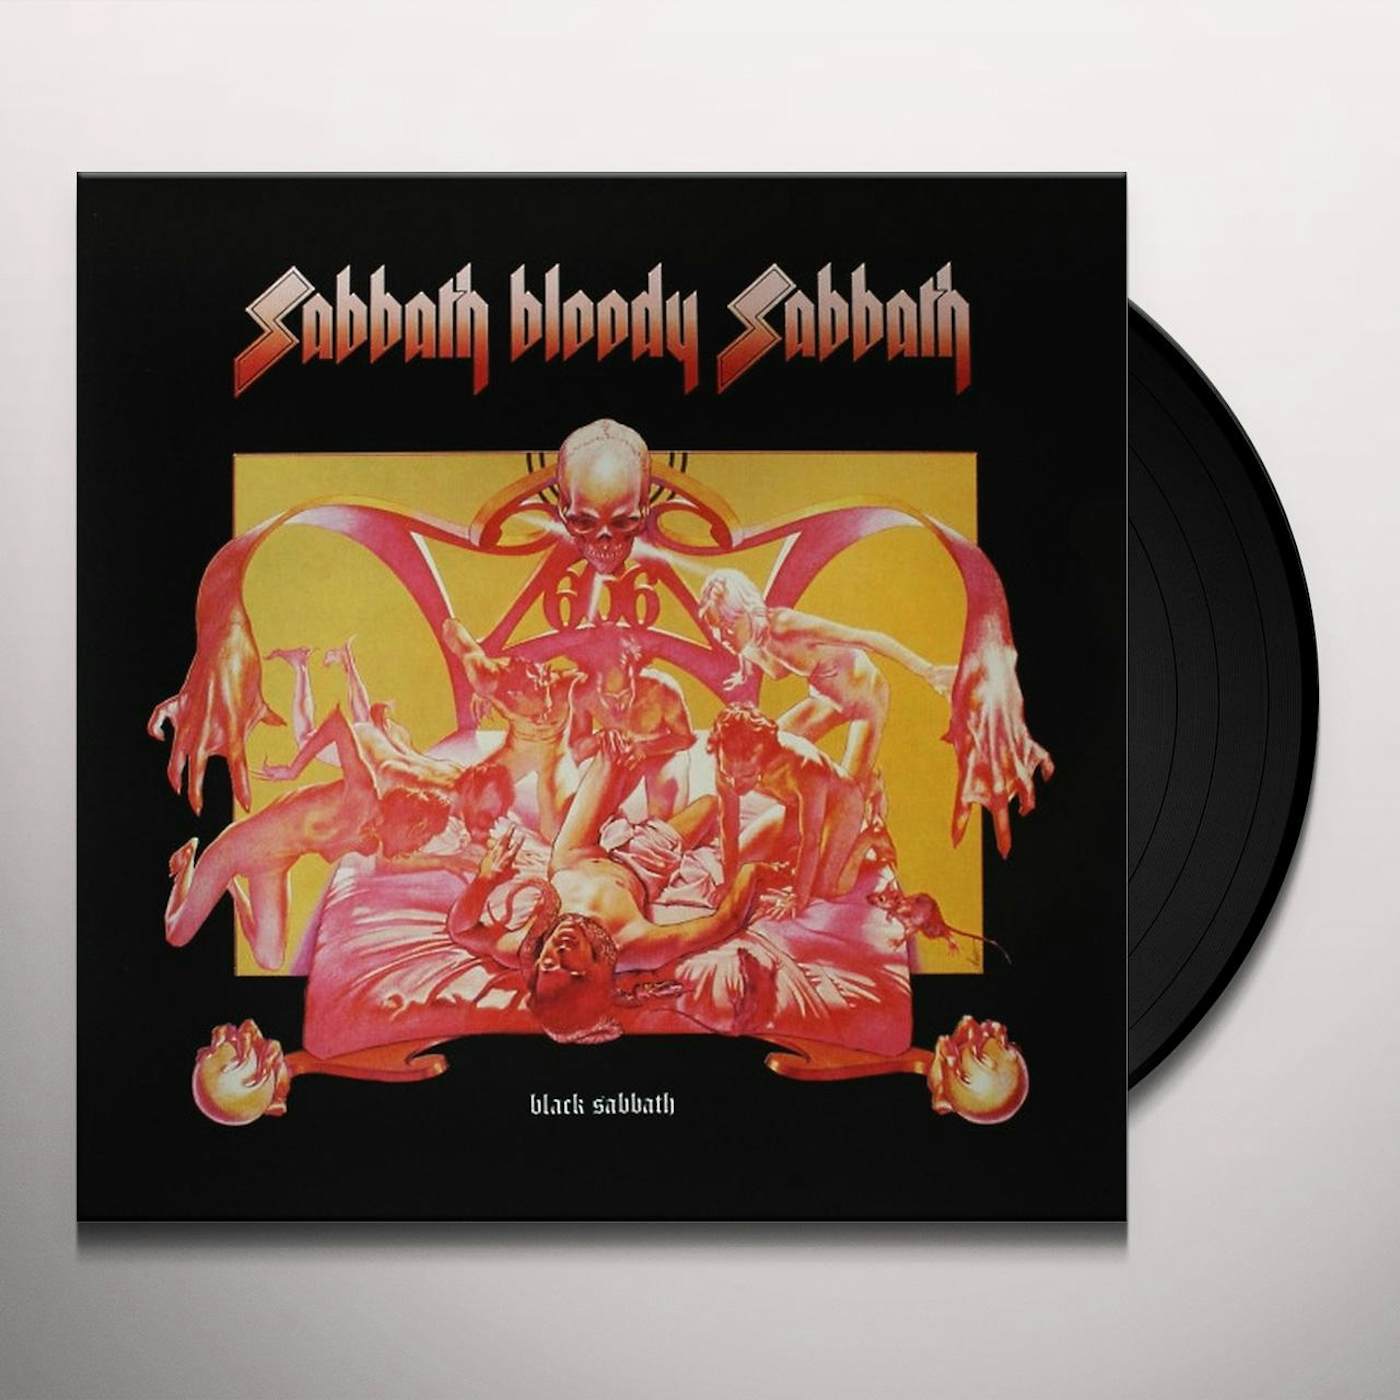 Black Sabbath - Black Sabbath (50th Anniversary) - Vinilo